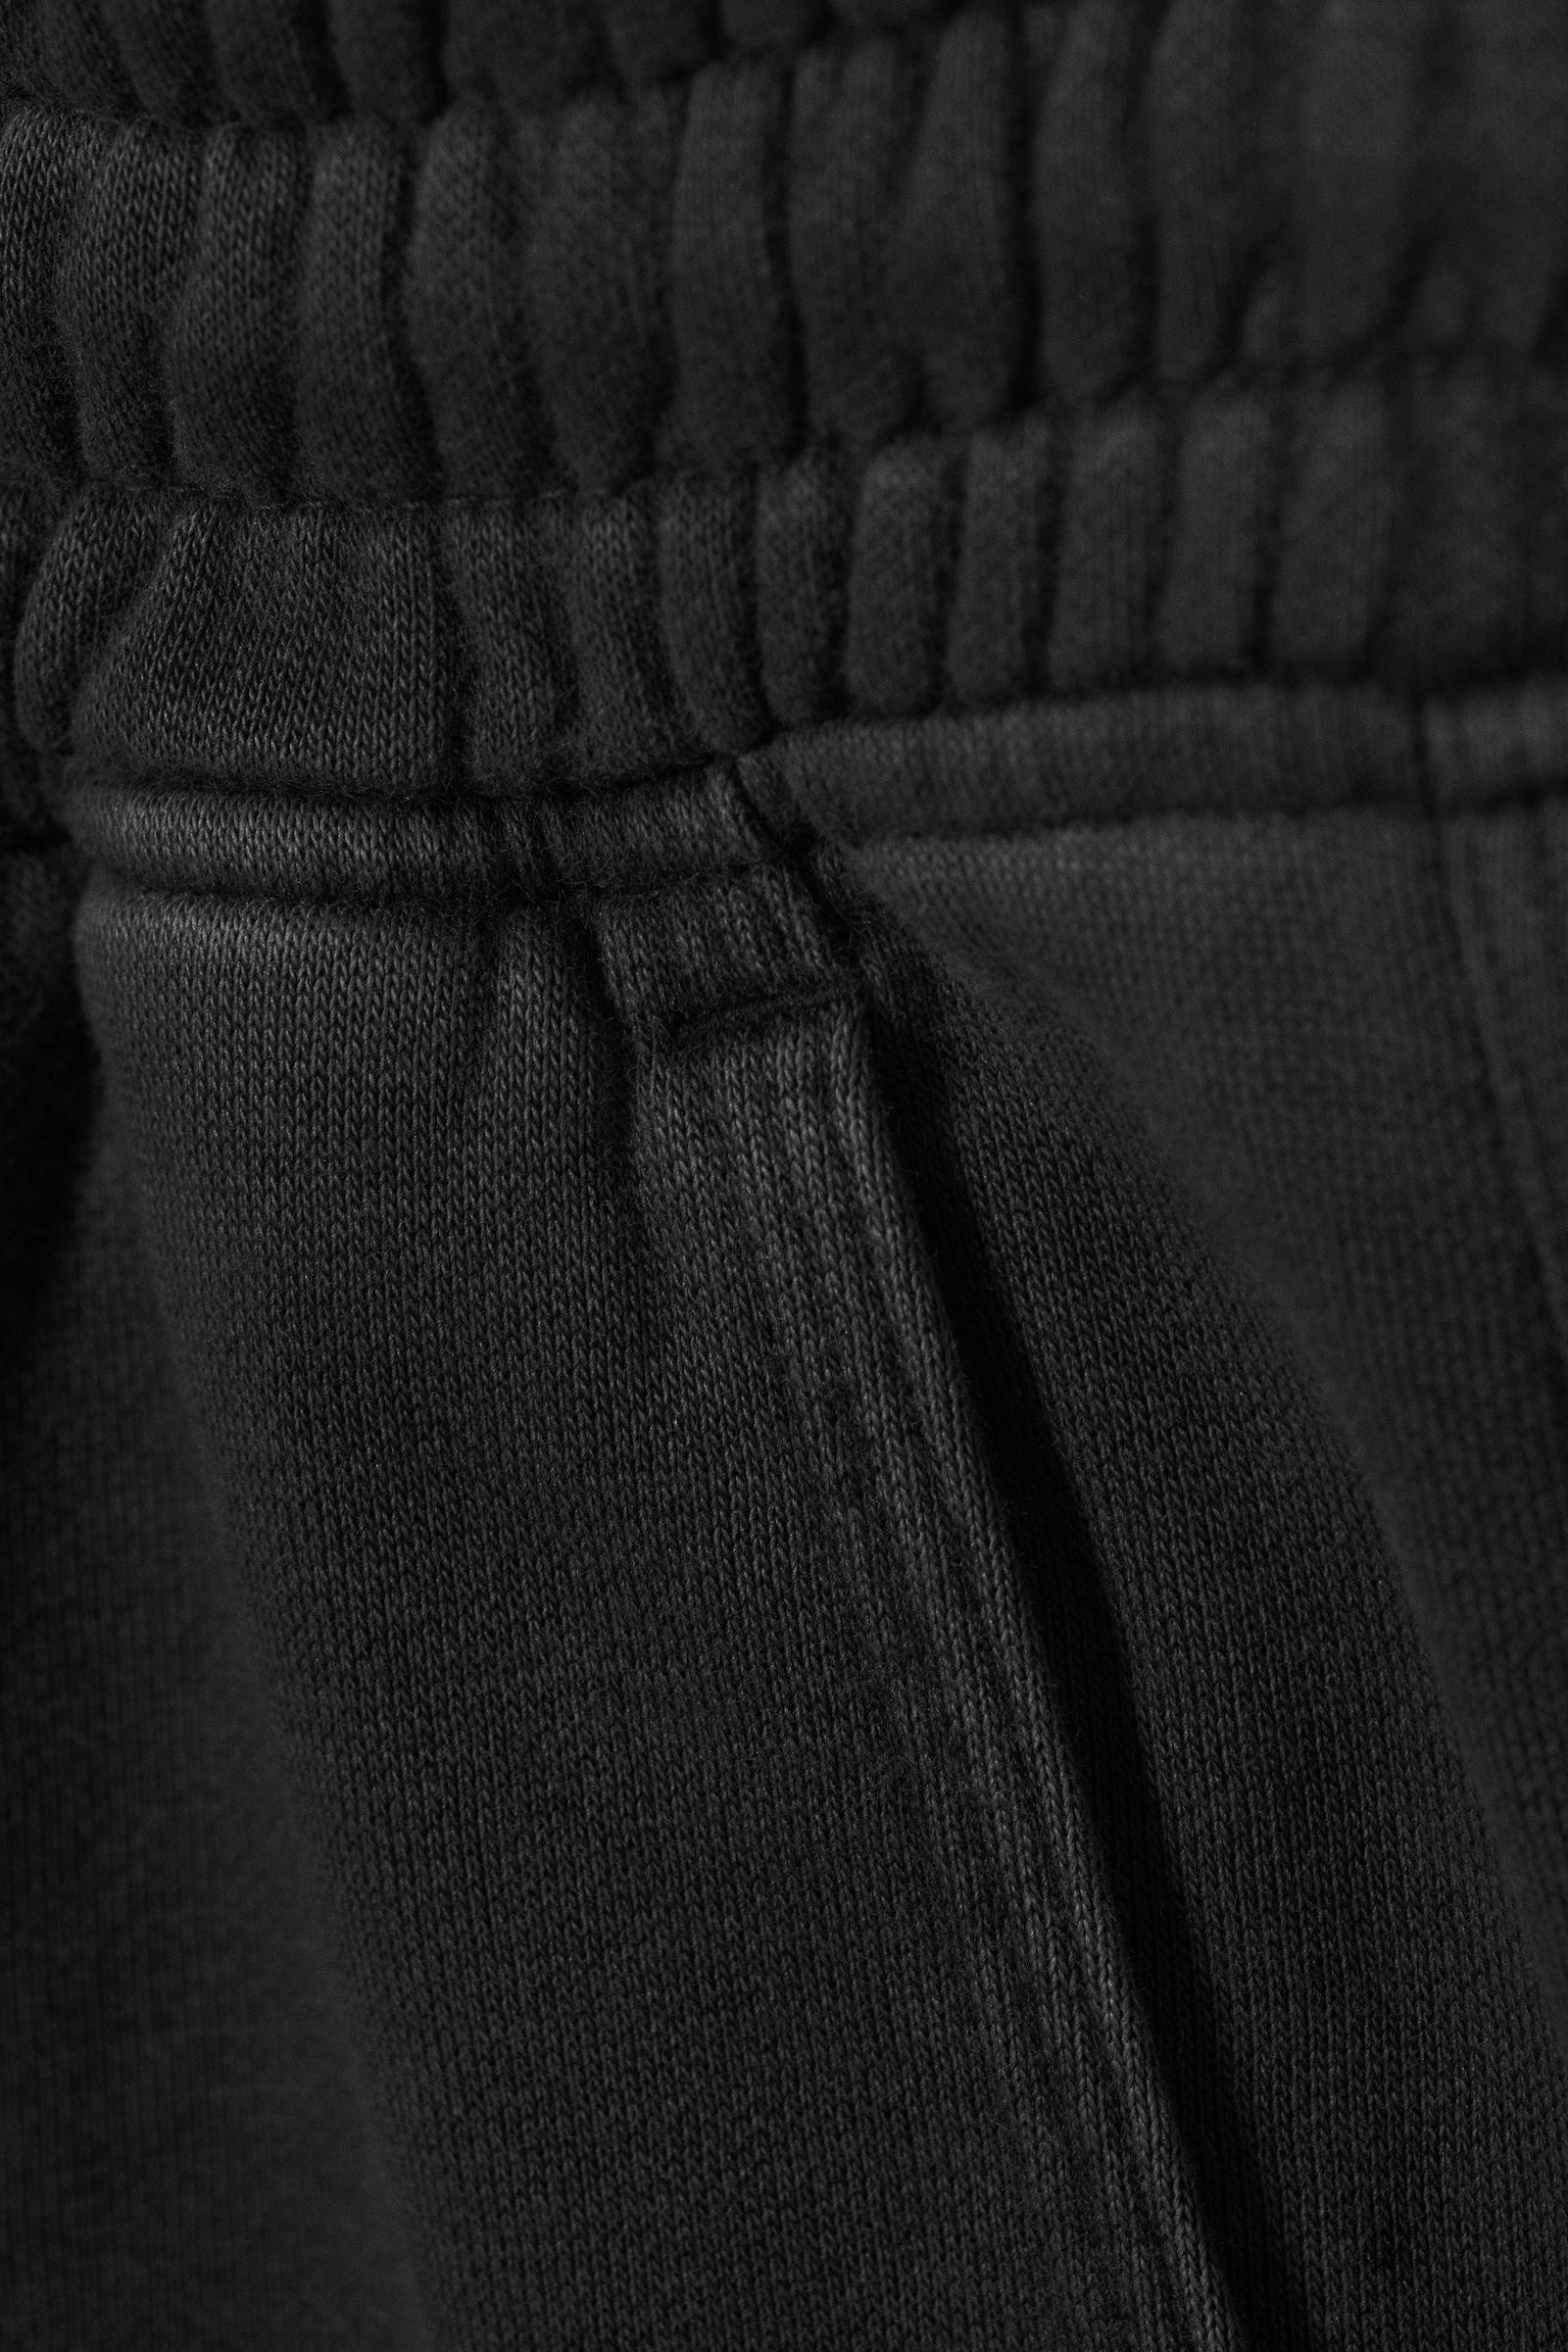 Washed Black - Astro Sweatpants - 3